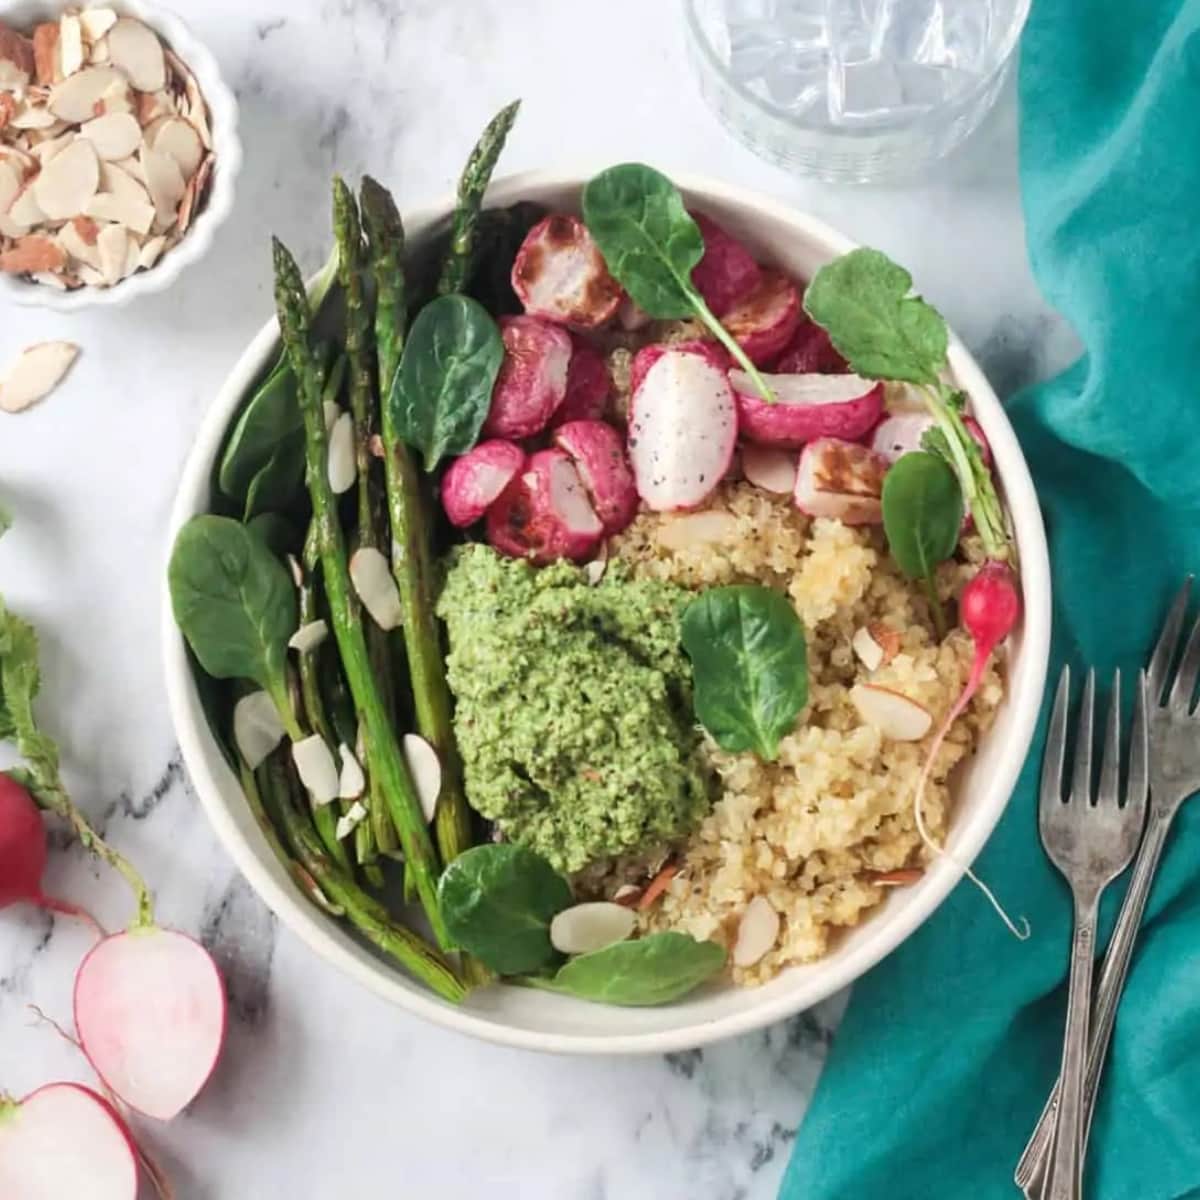 Quinoa and veggies in a bowl